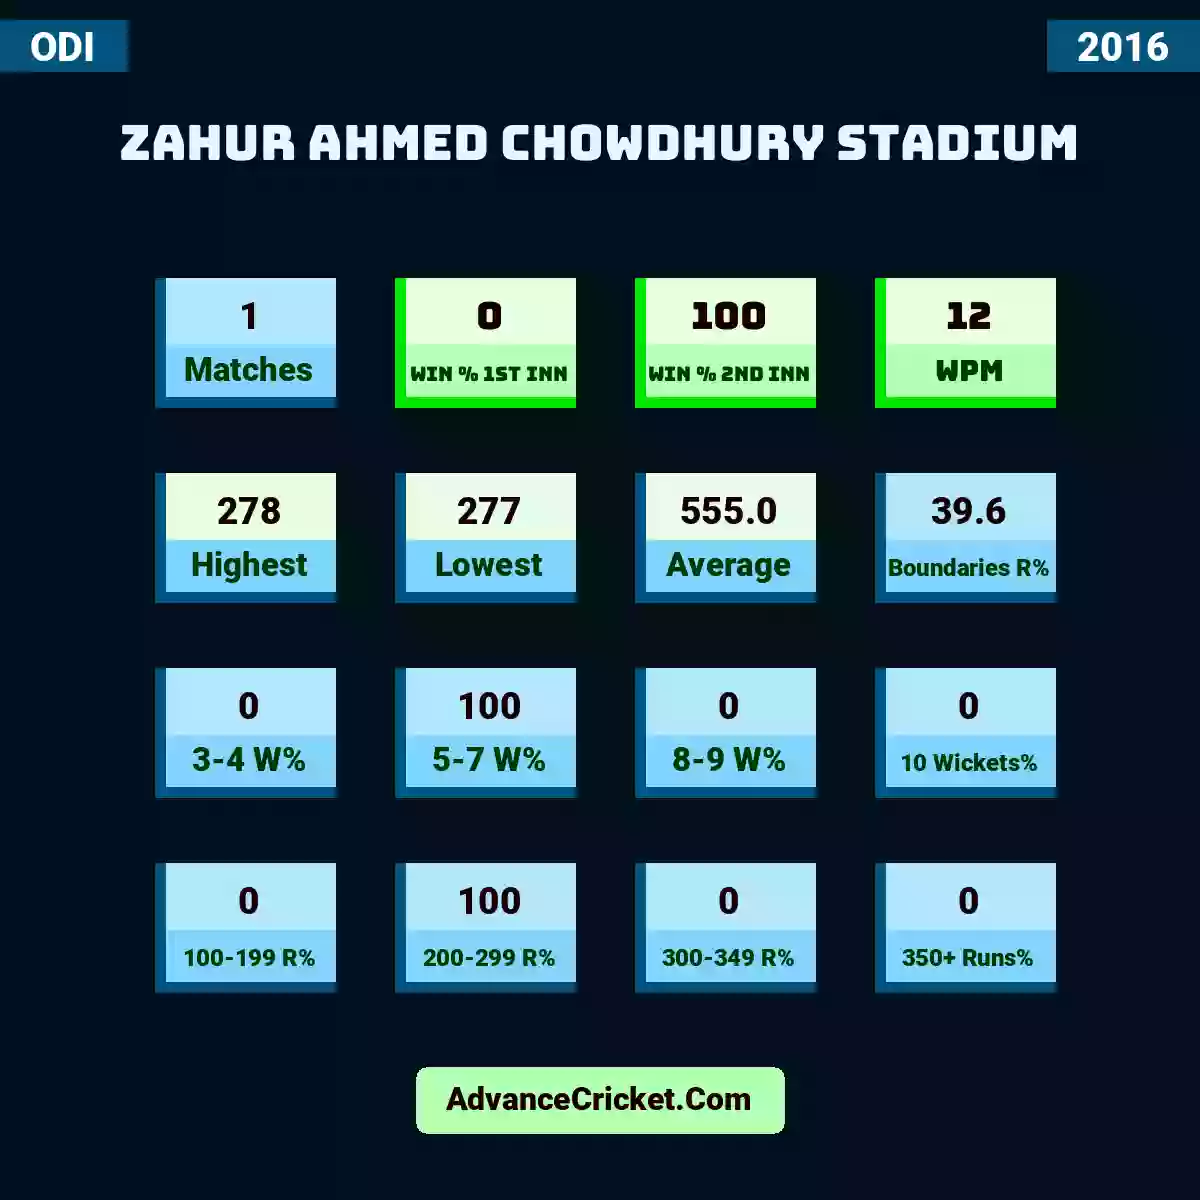 Image showing Zahur Ahmed Chowdhury Stadium with Matches: 1, Win % 1st Inn: 0, Win % 2nd Inn: 100, WPM: 12, Highest: 278, Lowest: 277, Average: 555.0, Boundaries R%: 39.6, 3-4 W%: 0, 5-7 W%: 100, 8-9 W%: 0, 10 Wickets%: 0, 100-199 R%: 0, 200-299 R%: 100, 300-349 R%: 0, 350+ Runs%: 0.